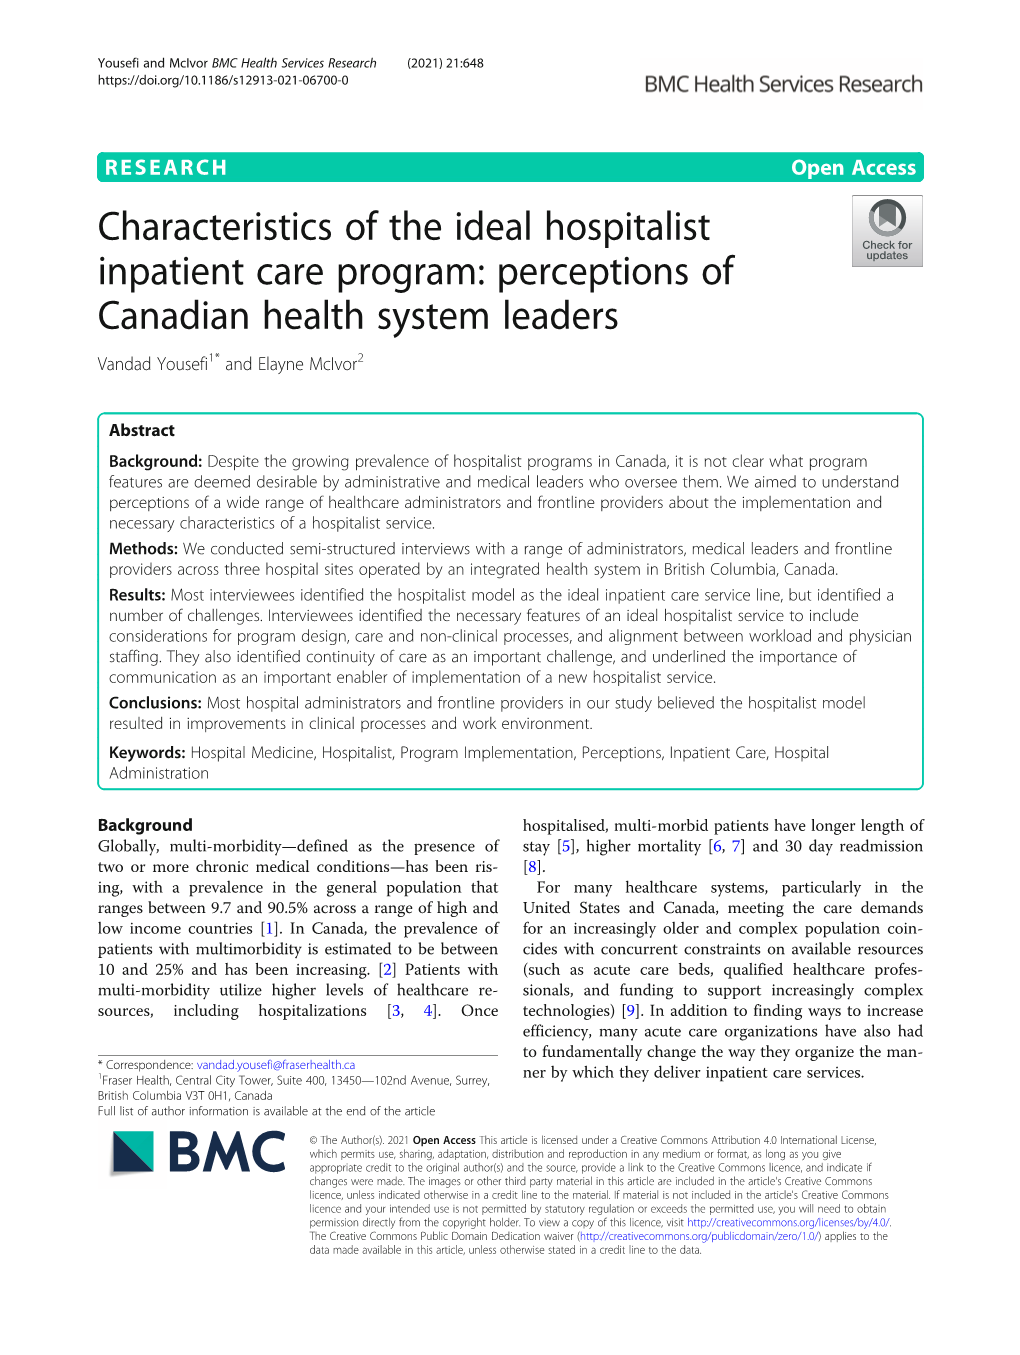 Characteristics of the Ideal Hospitalist Inpatient Care Program: Perceptions of Canadian Health System Leaders Vandad Yousefi1* and Elayne Mcivor2